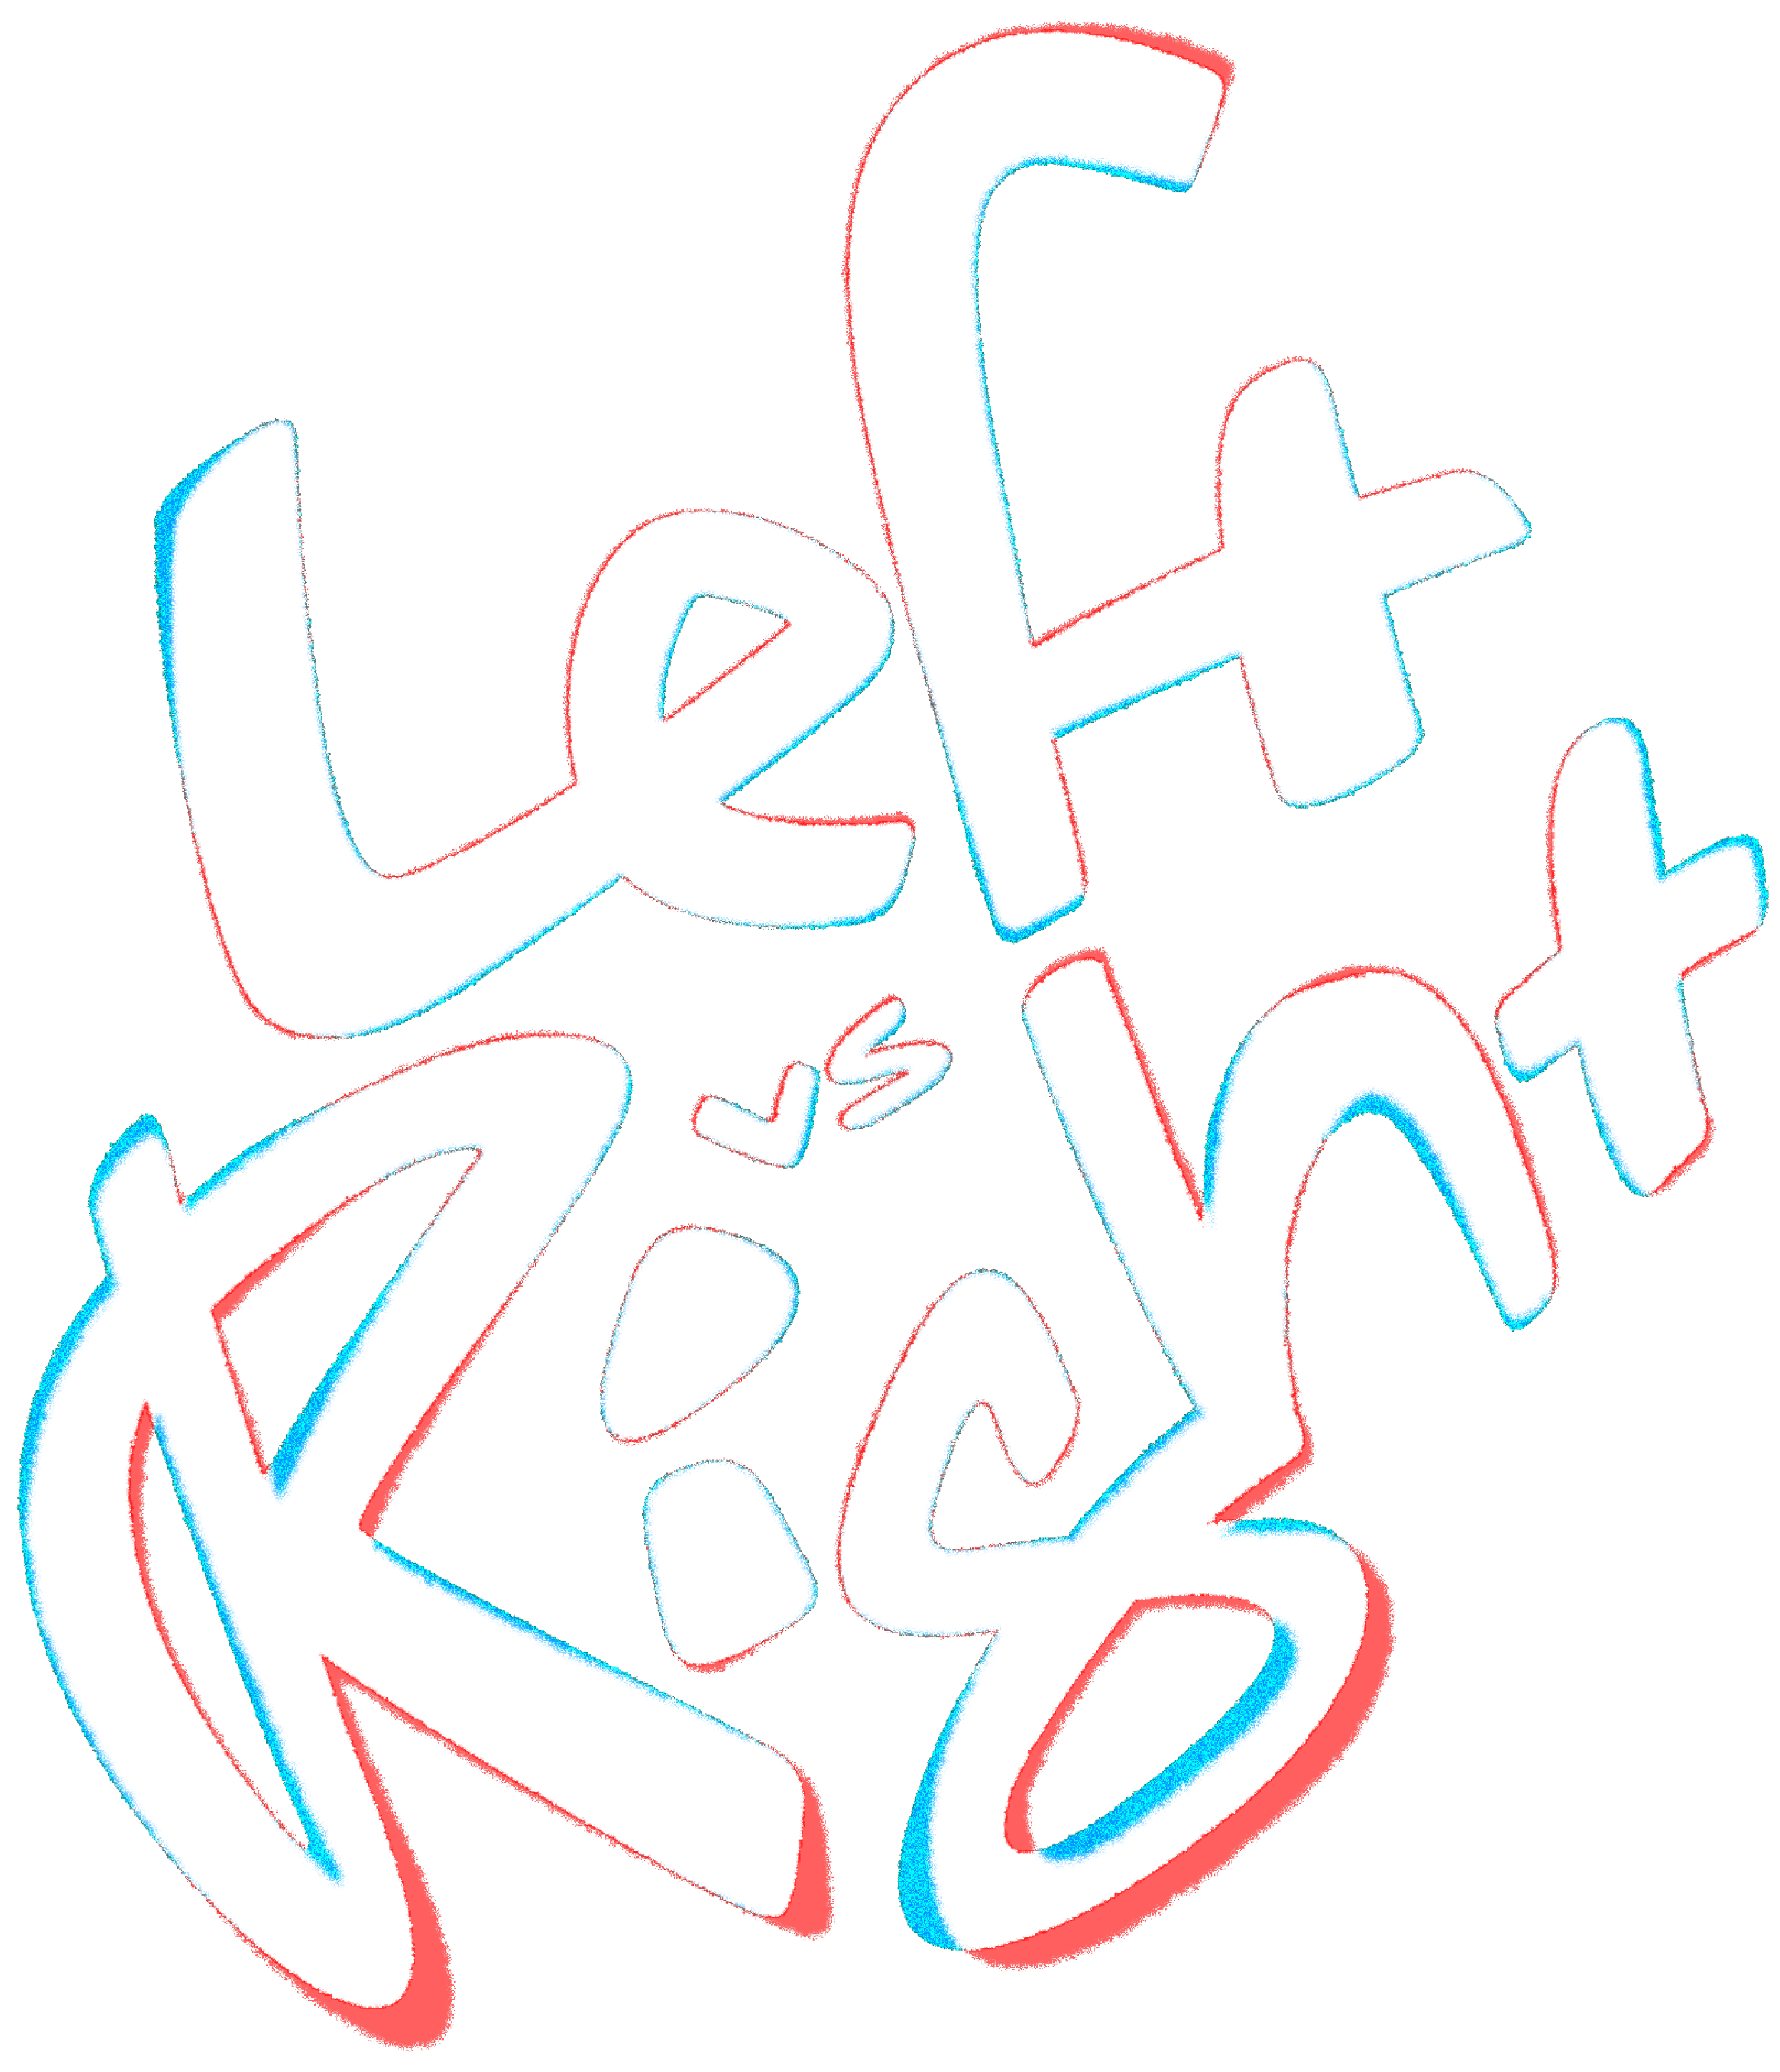 Left vs. Right